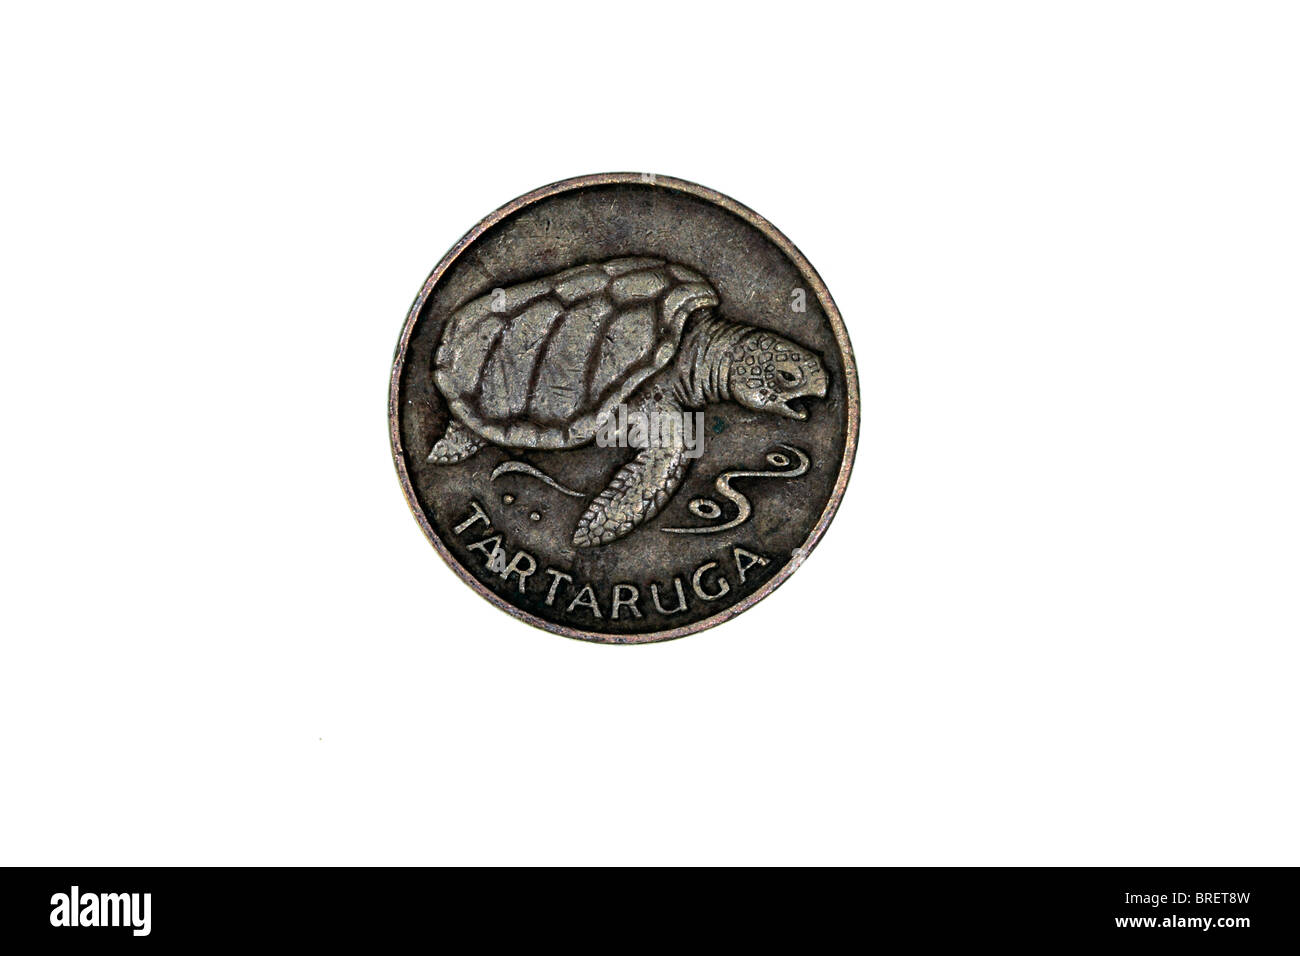 Coin - Cape Verde Stock Photo - Alamy